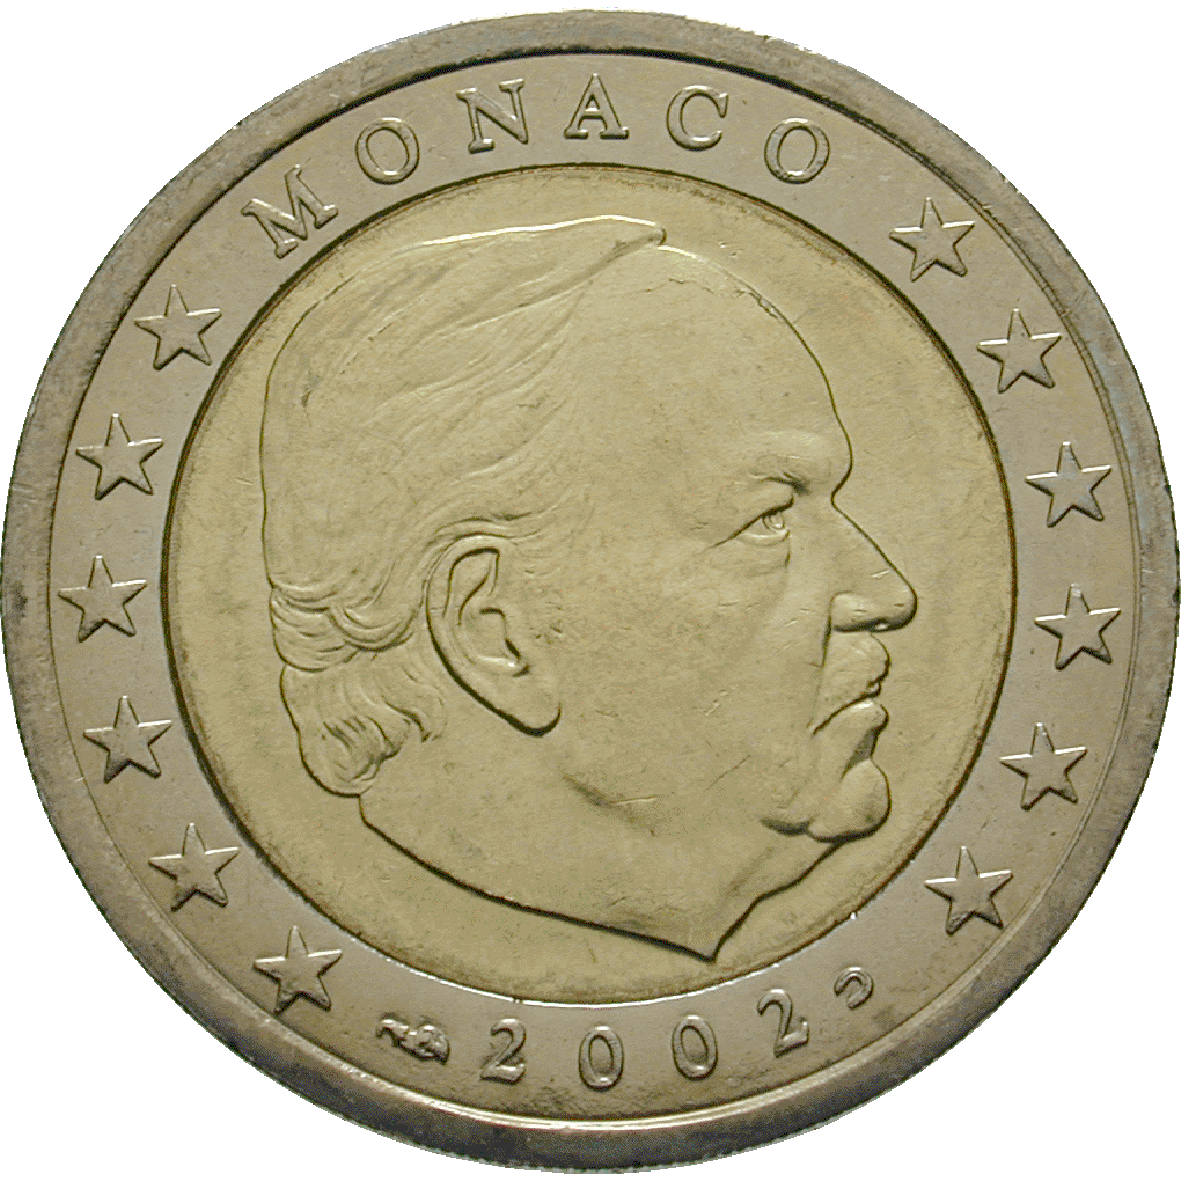 Fürstentum Monaco, Rainer III., 2 Euro 2002 (reverse)